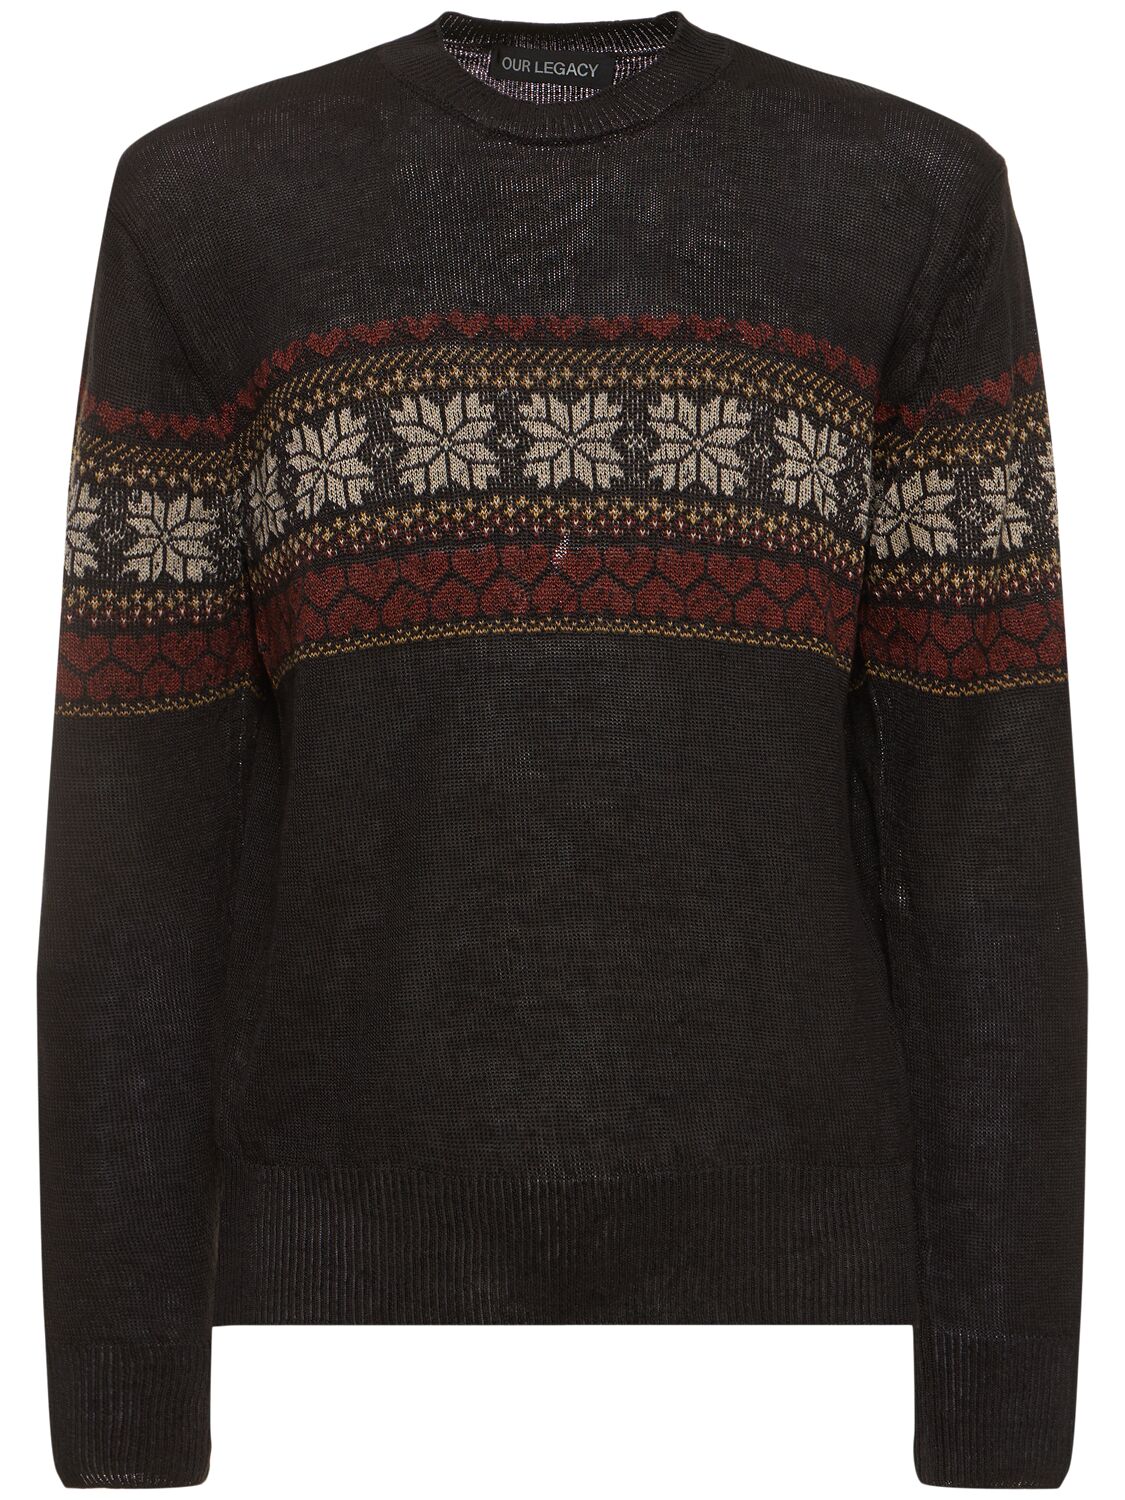 Hemp Knit Crewneck Sweater